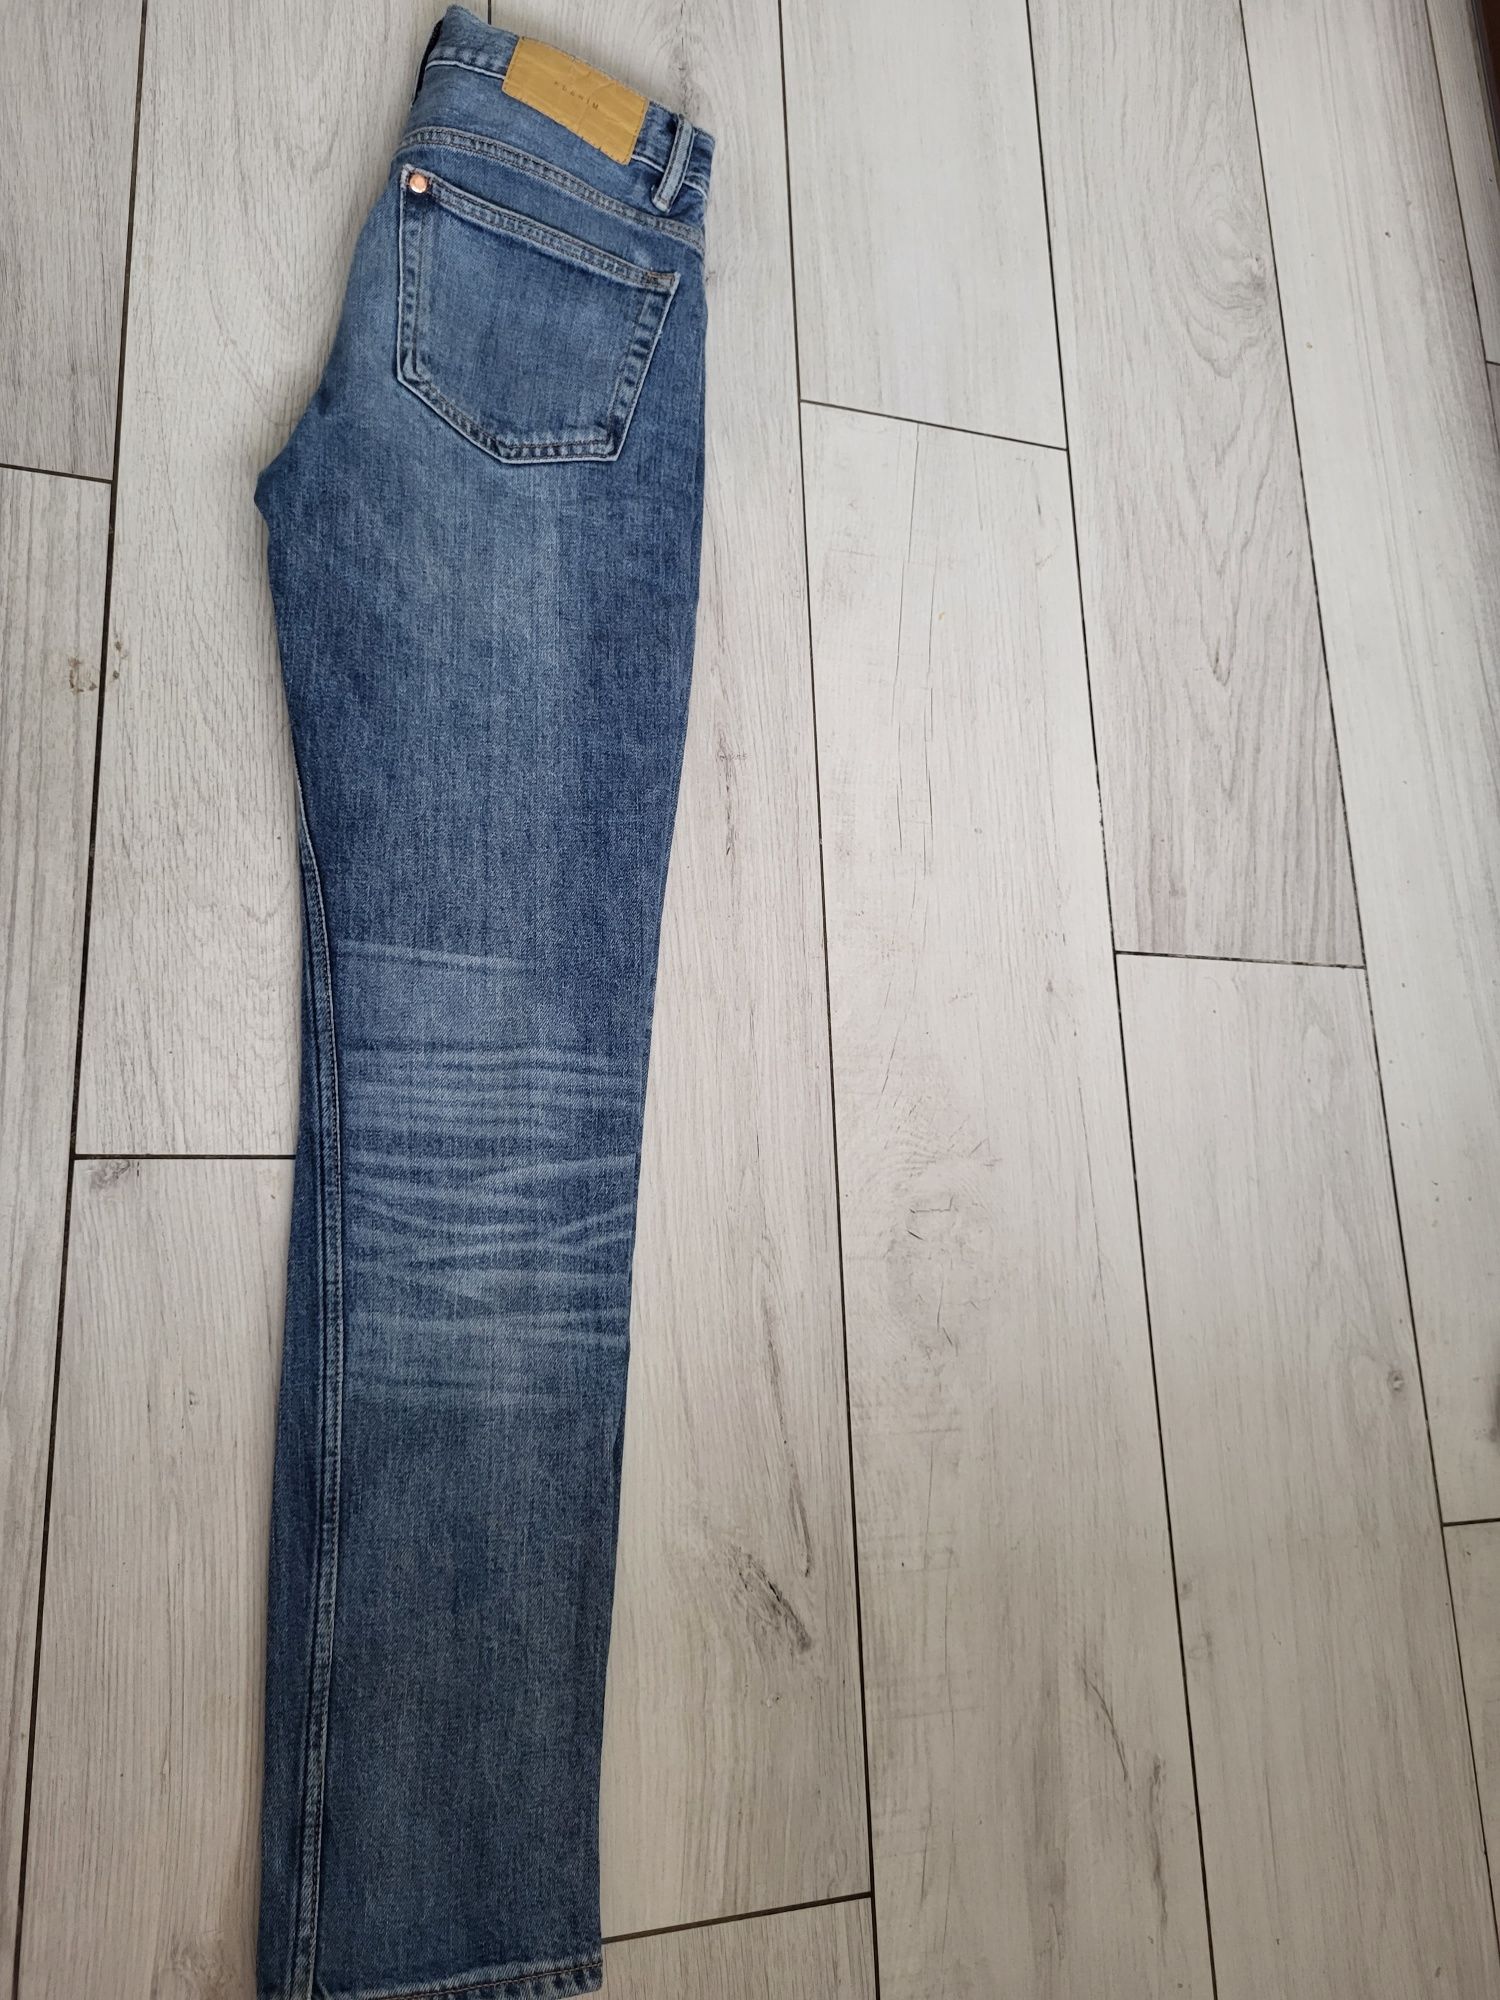 Jeansy spodnie denim rozmiar 36 S